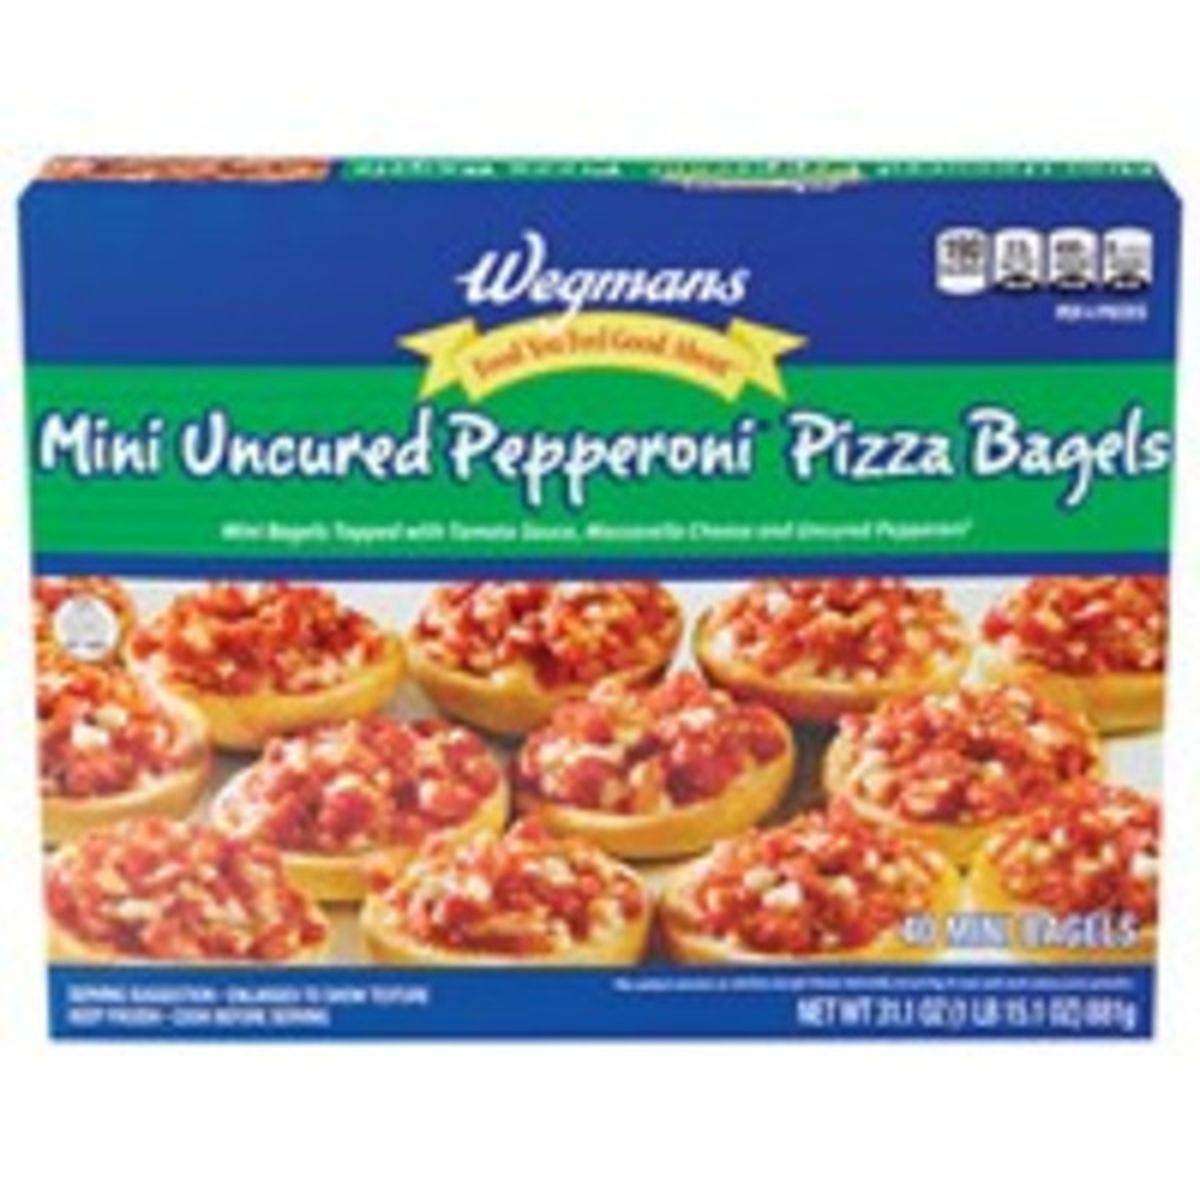 Calories in Wegmans Mini Uncured Pepperoni Pizza Bagels